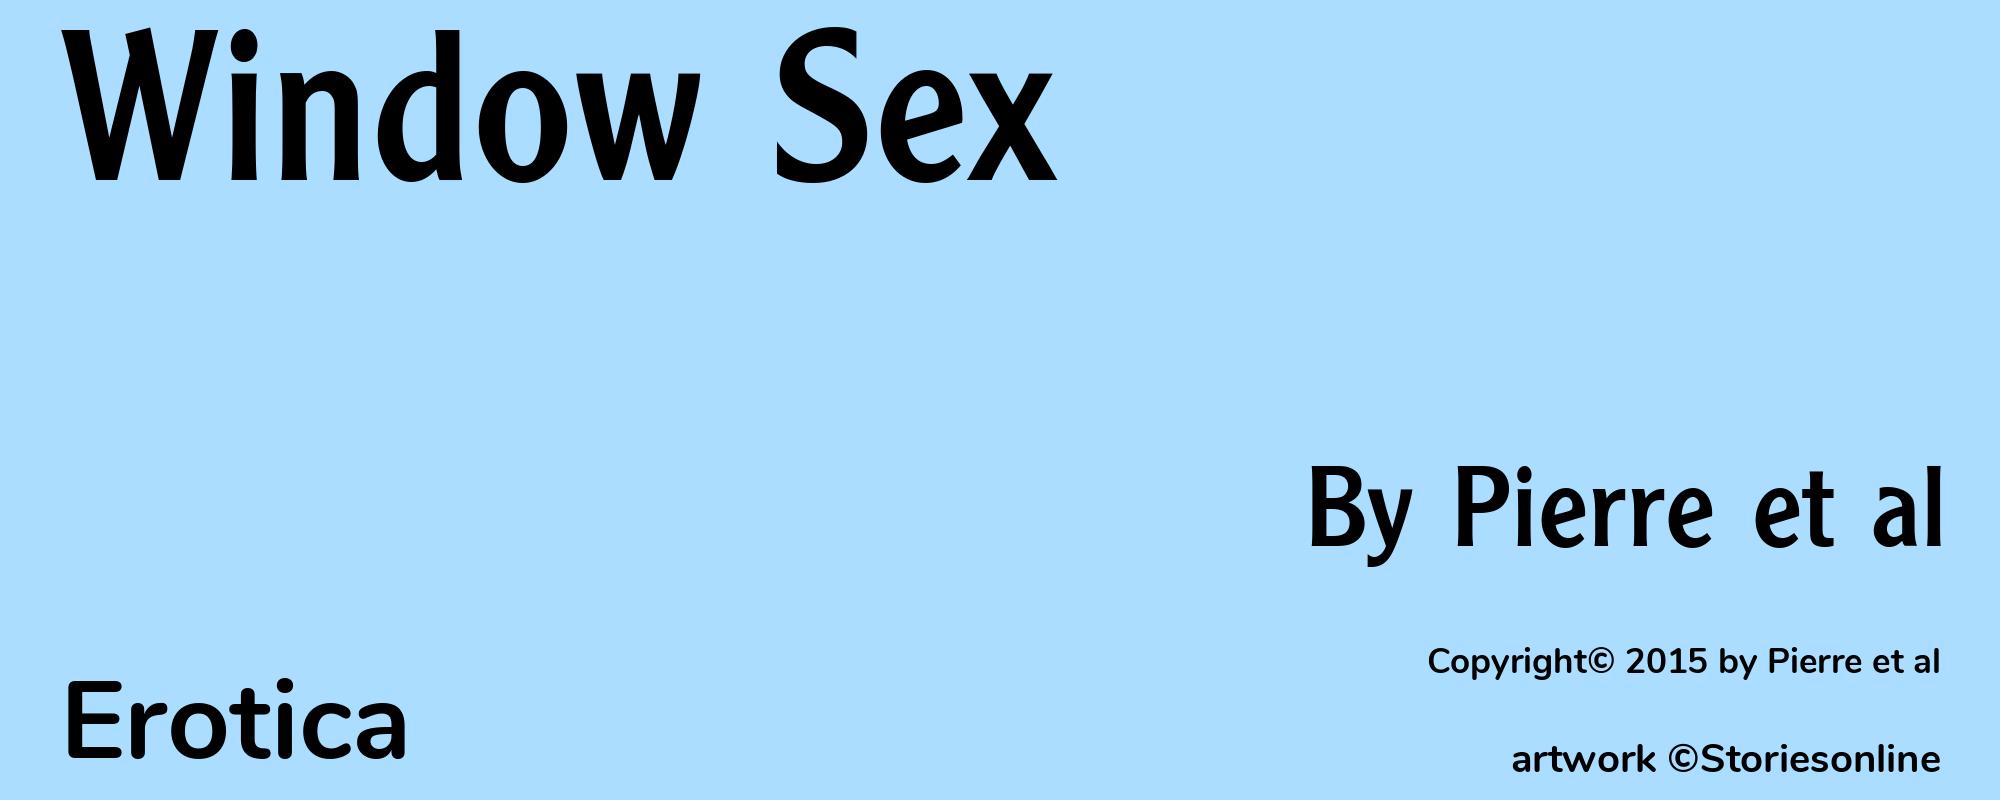 Window Sex - Cover